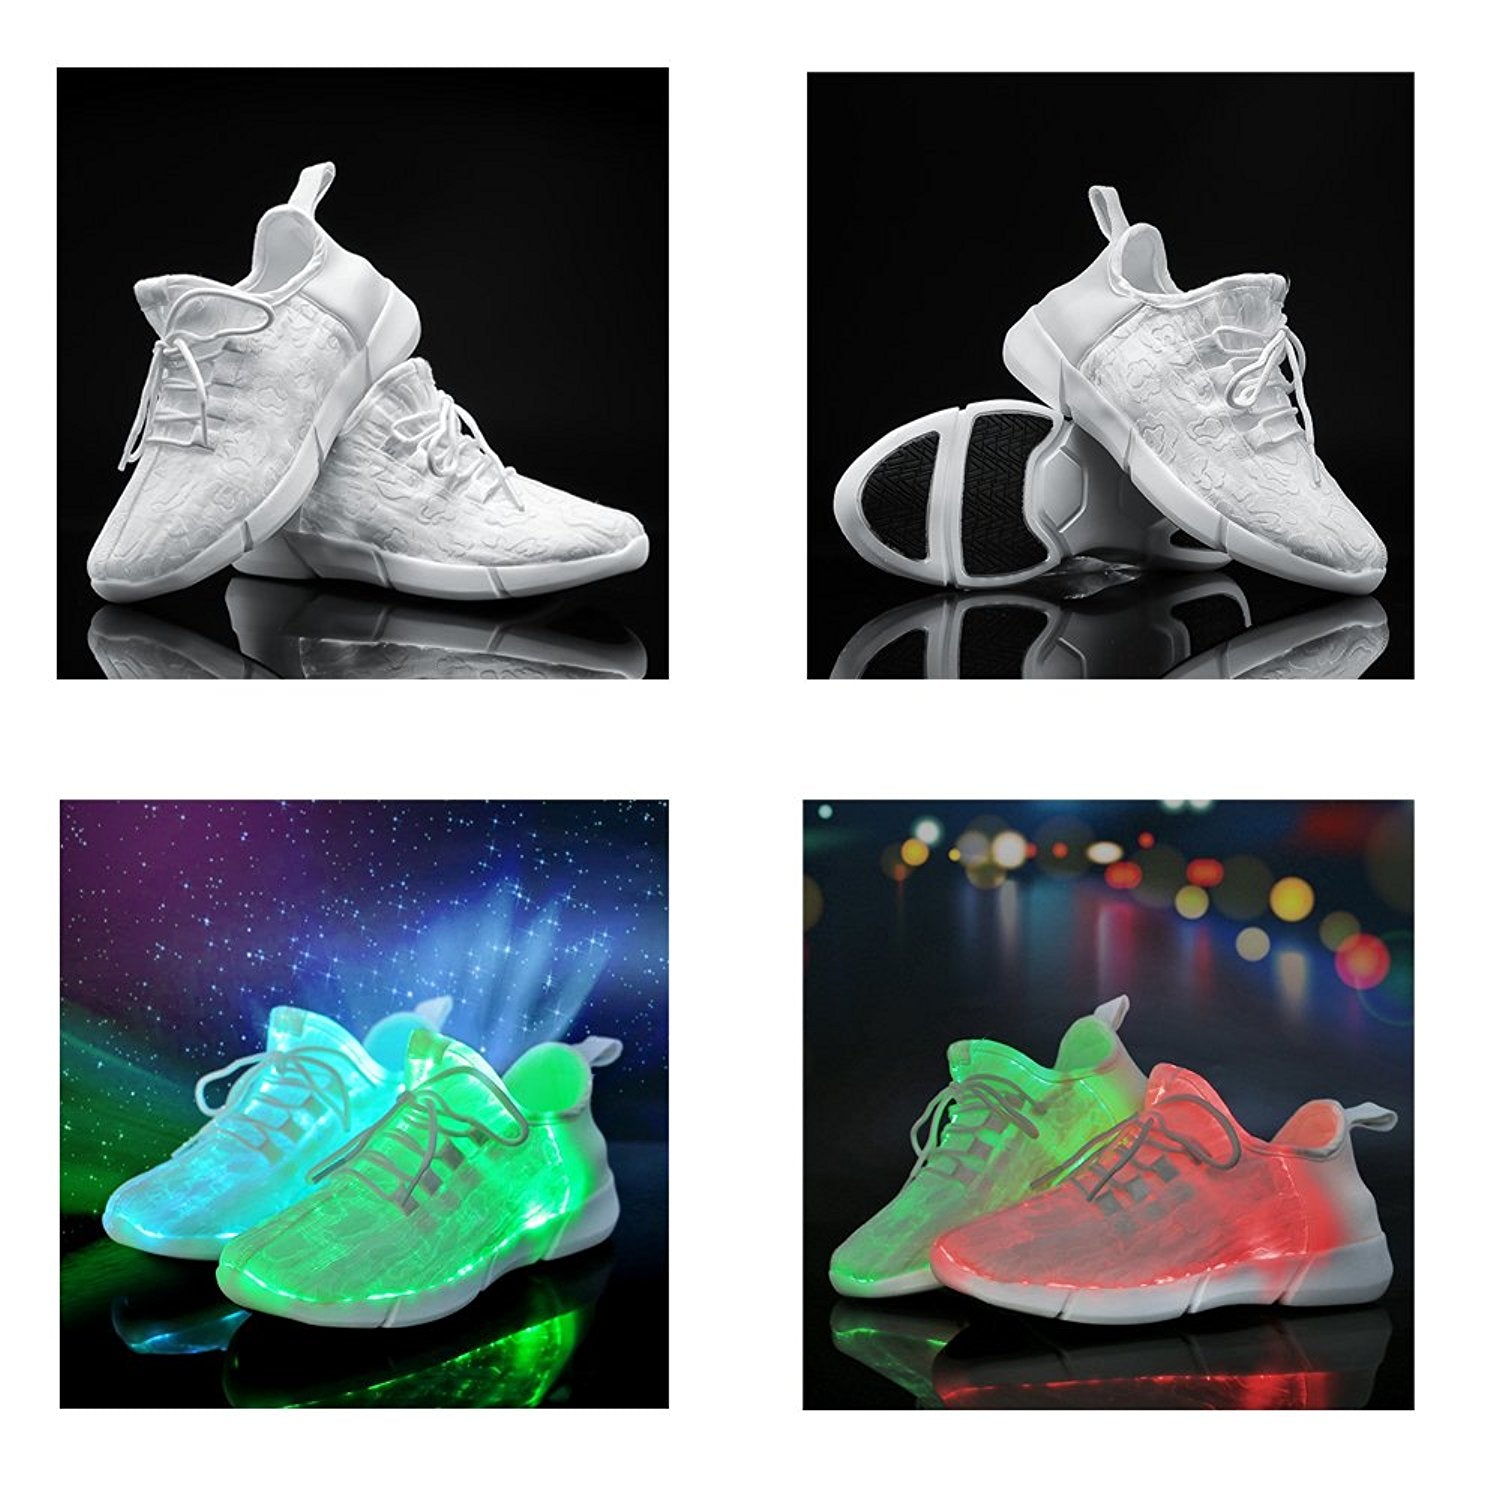 Light-up™ - Luminous Fiber Optic Shoes